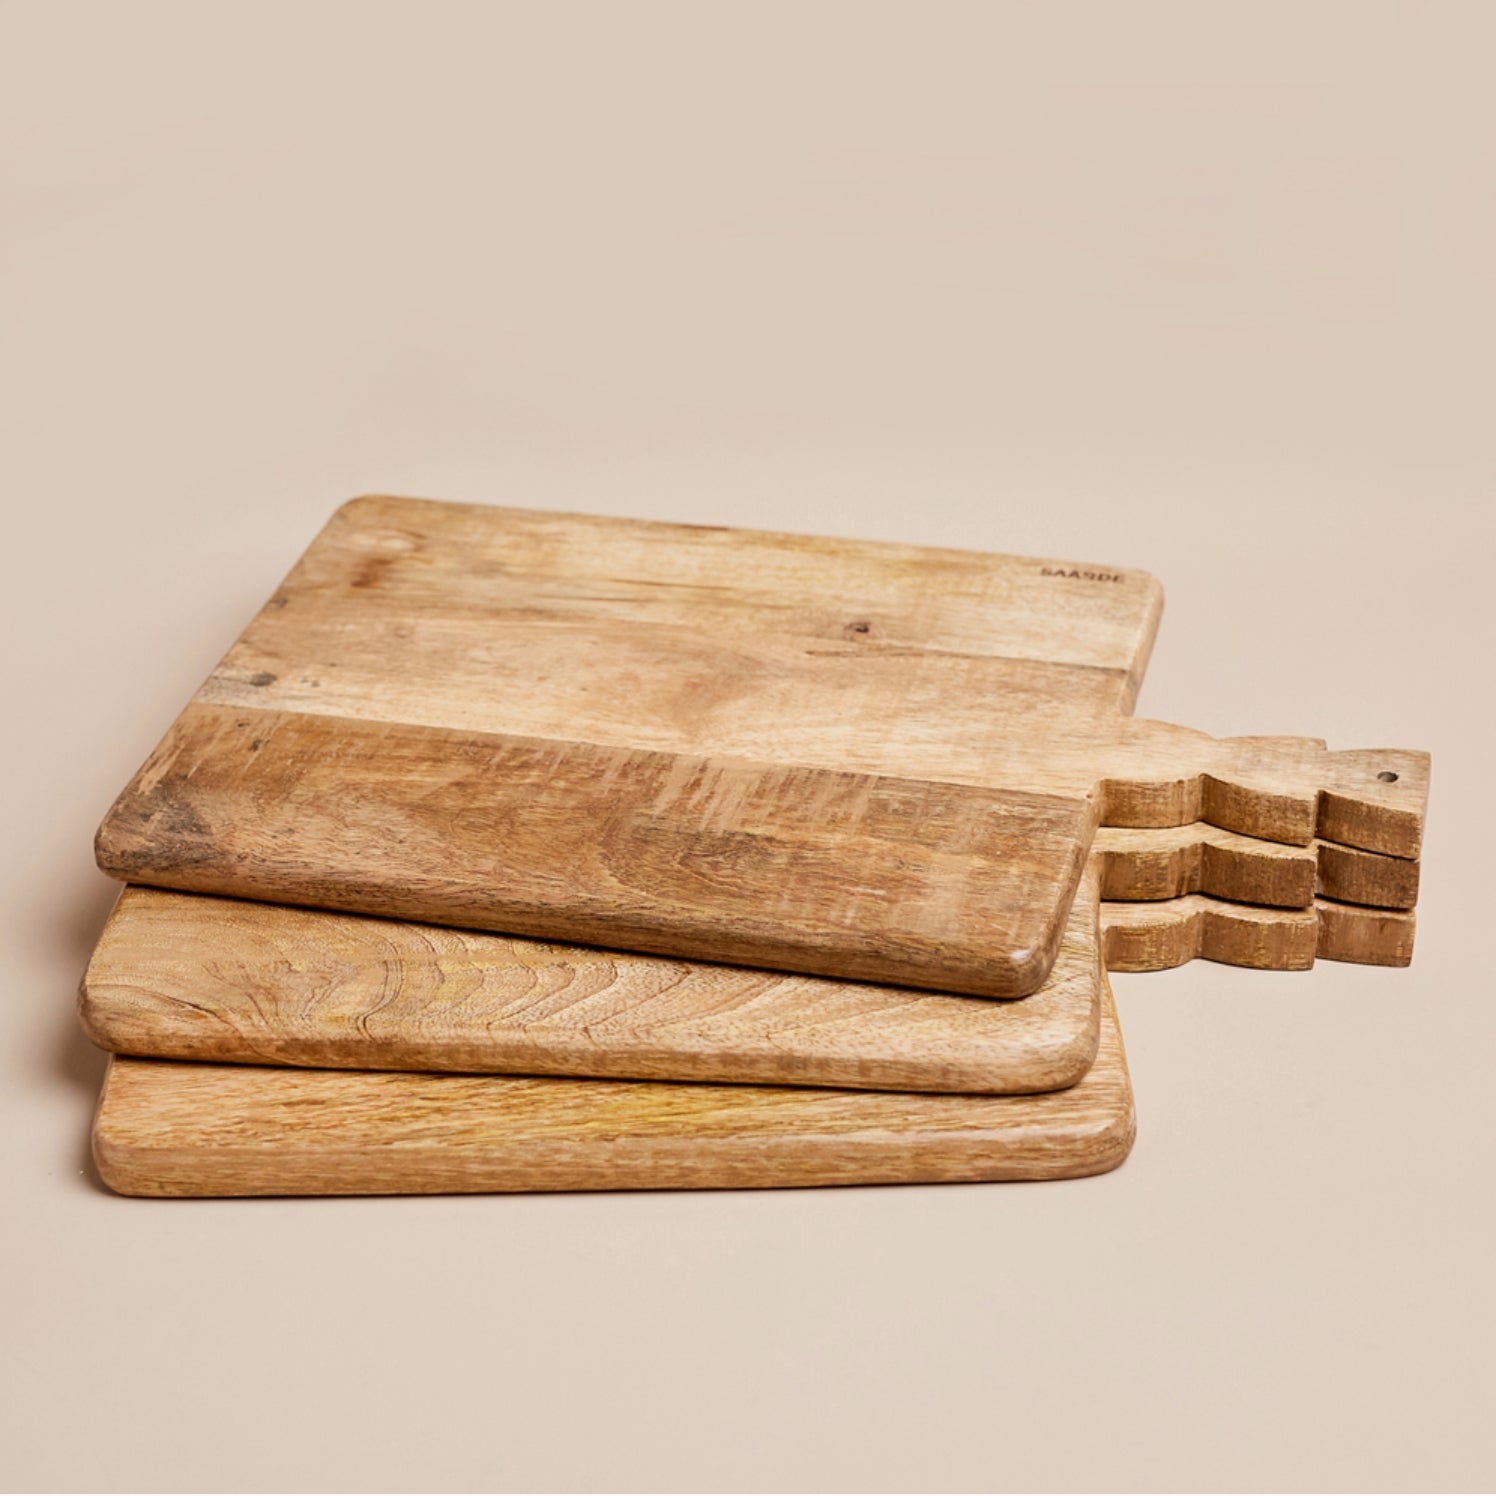 large ekmek bread board made from recycled mango wood by saardé, measures 10" x 12"